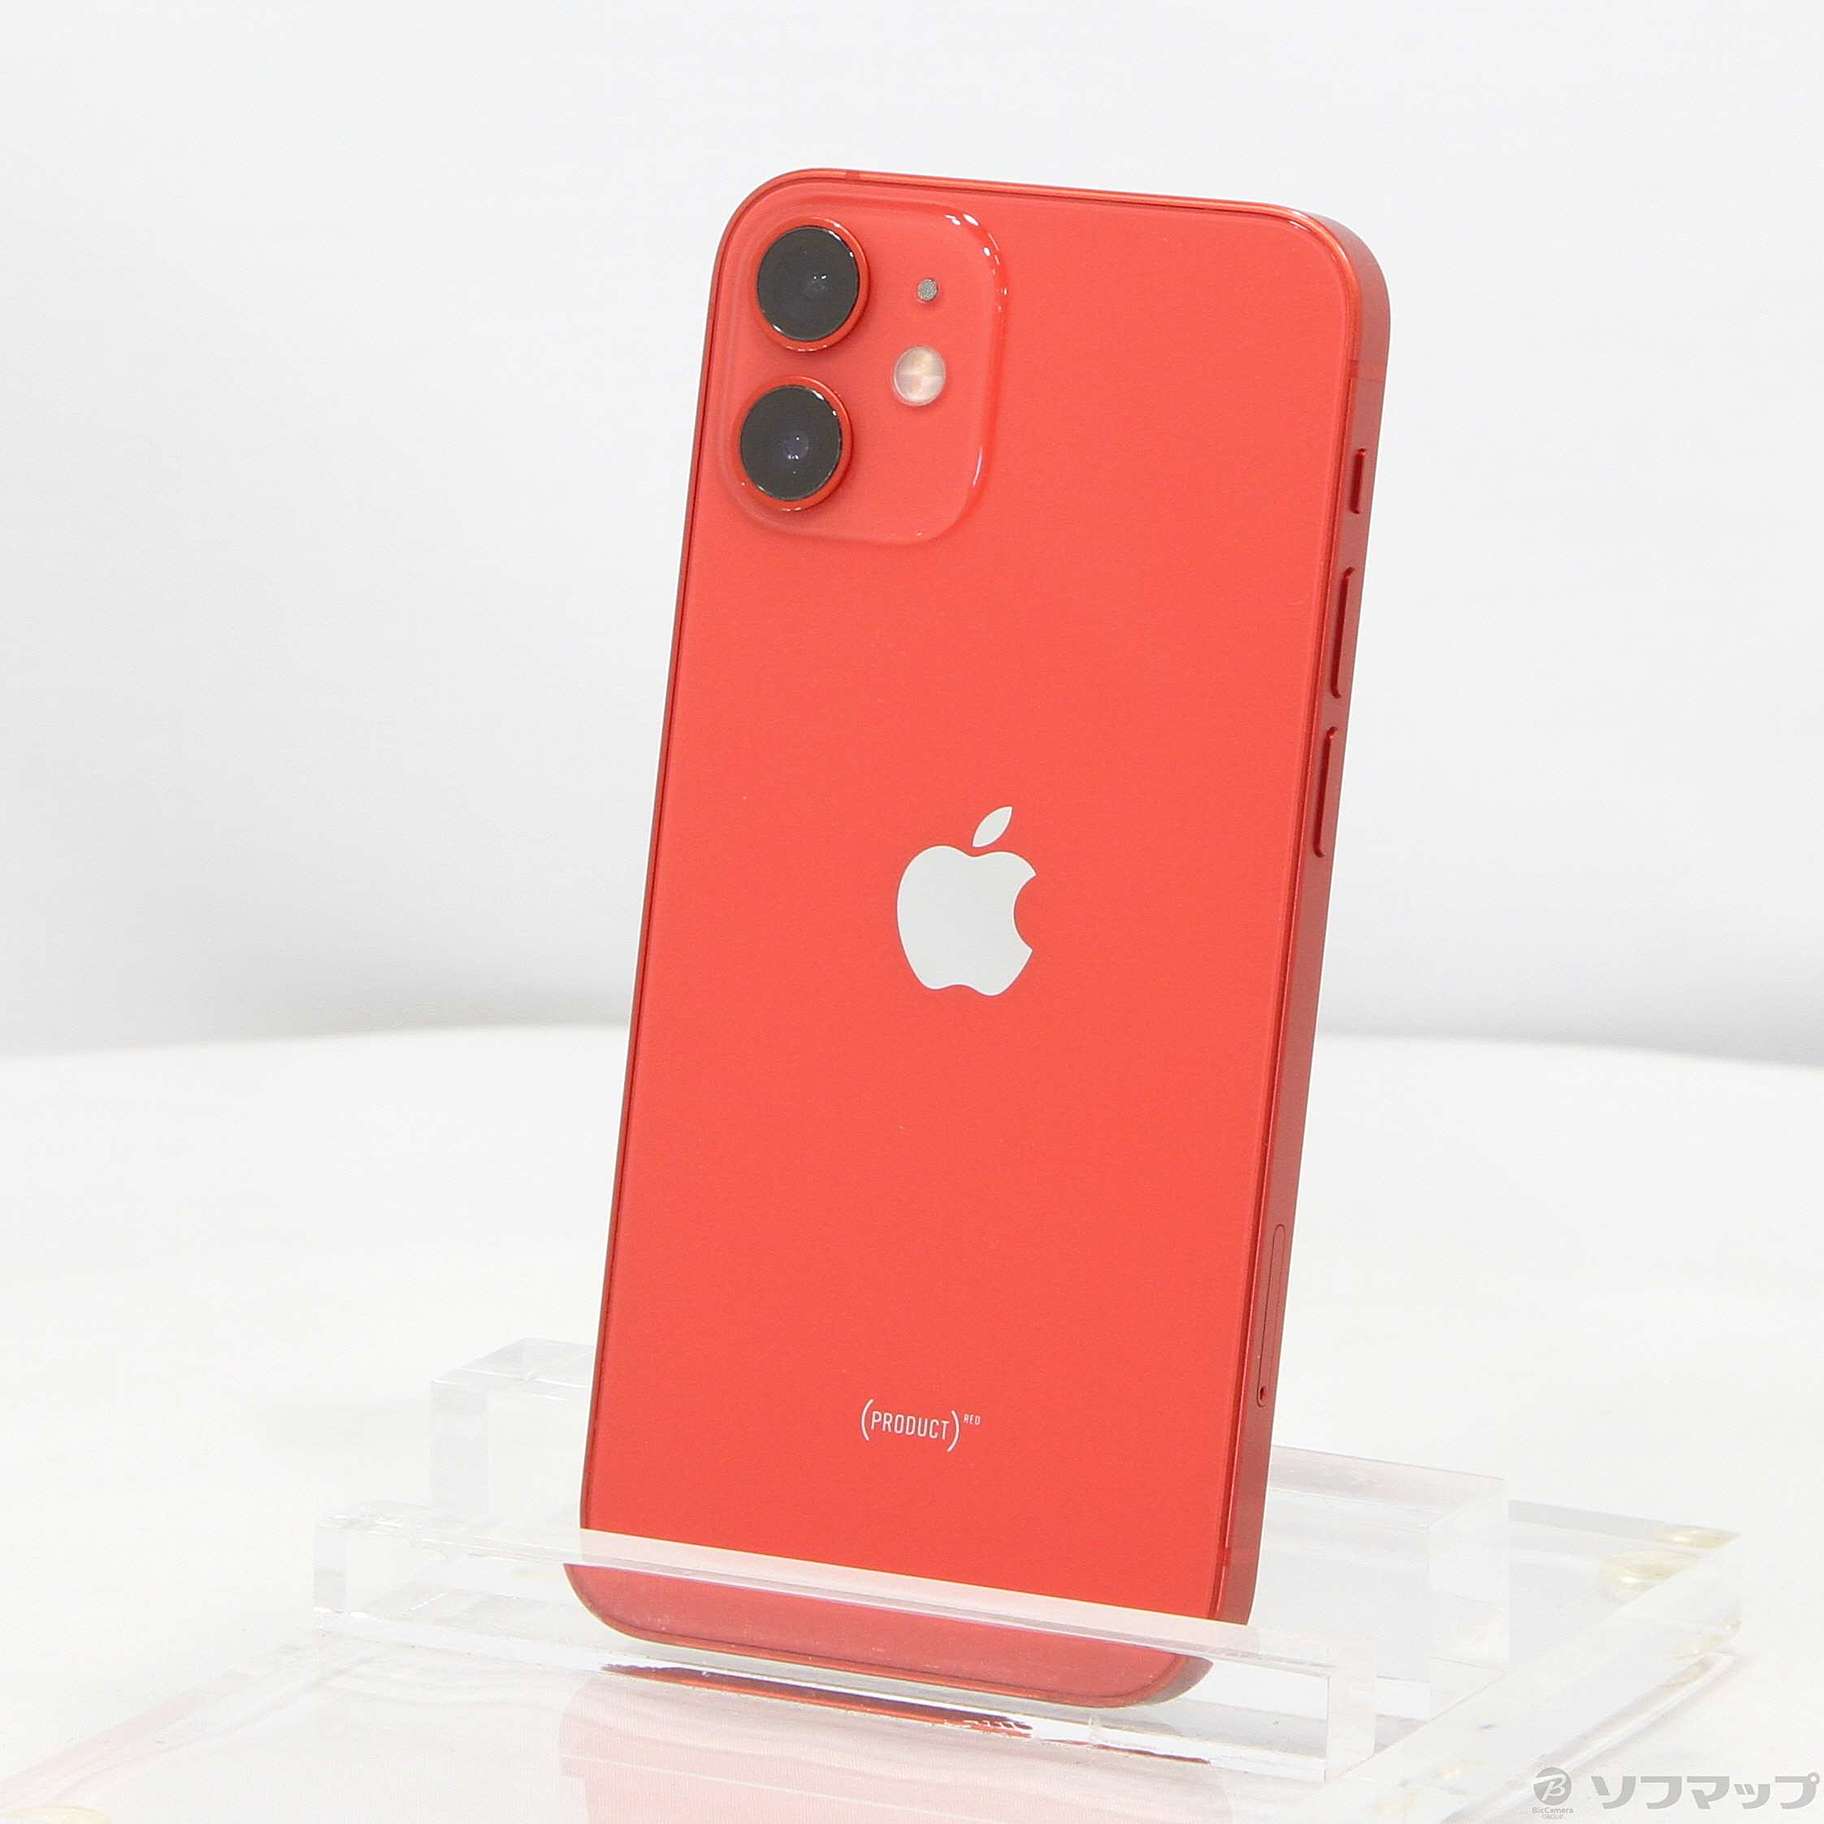 【SIMフリー】Apple iPhone 12 mini Red 128GB